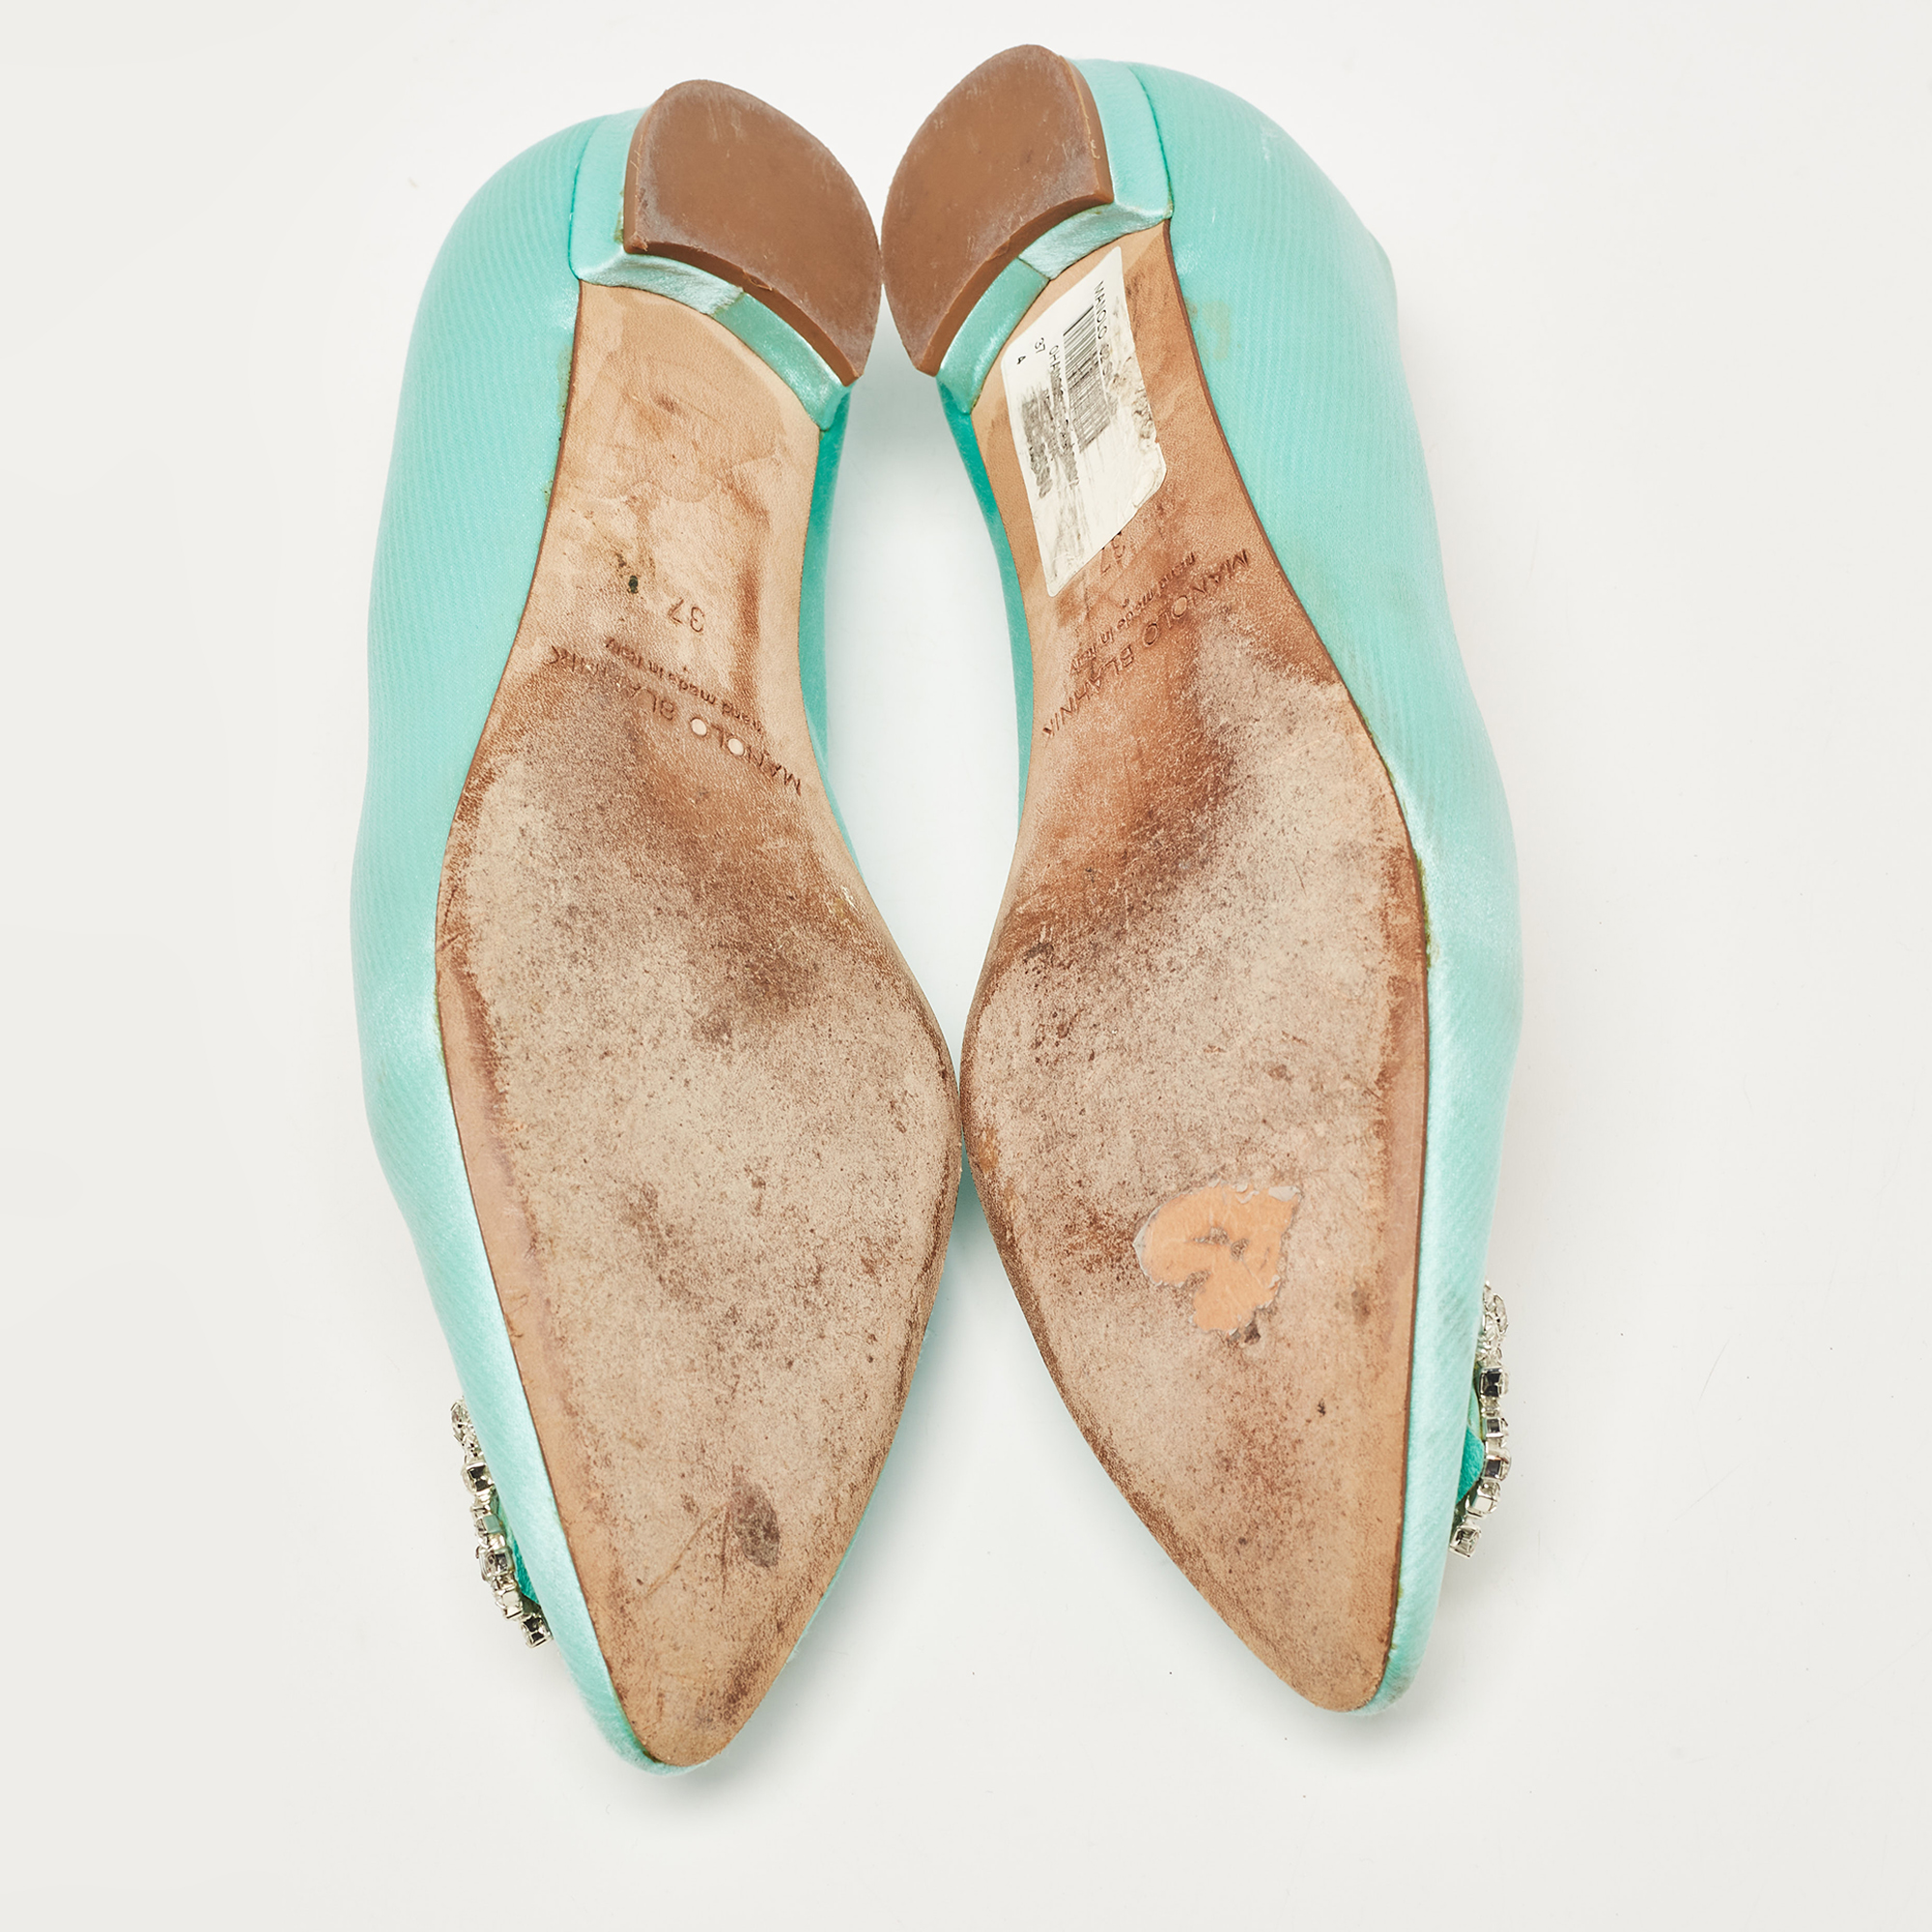 Manolo Blahnik Turquoise Satin Hangisi Ballet Flats Size 37